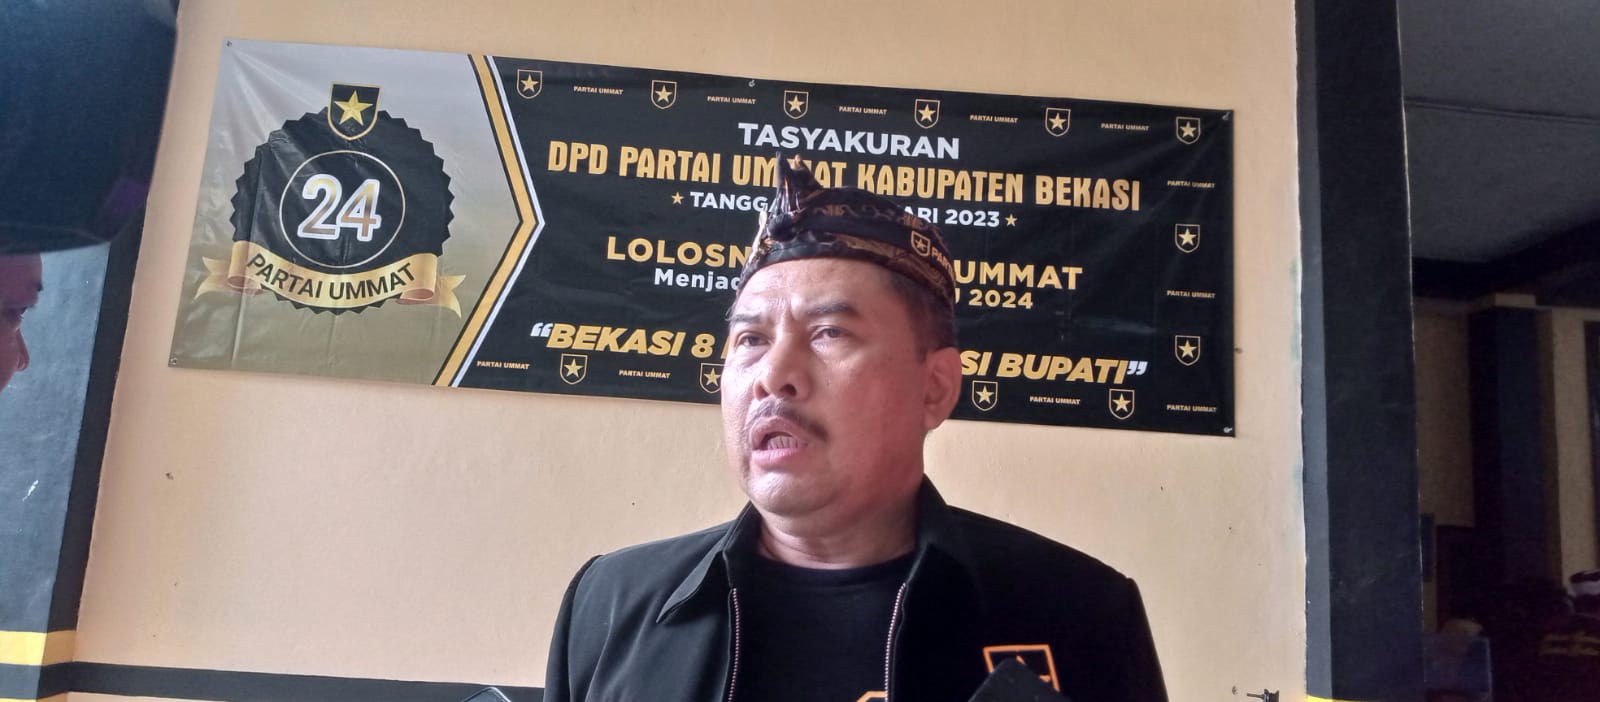 Ketua DPW Partai Ummat Jawa Barat